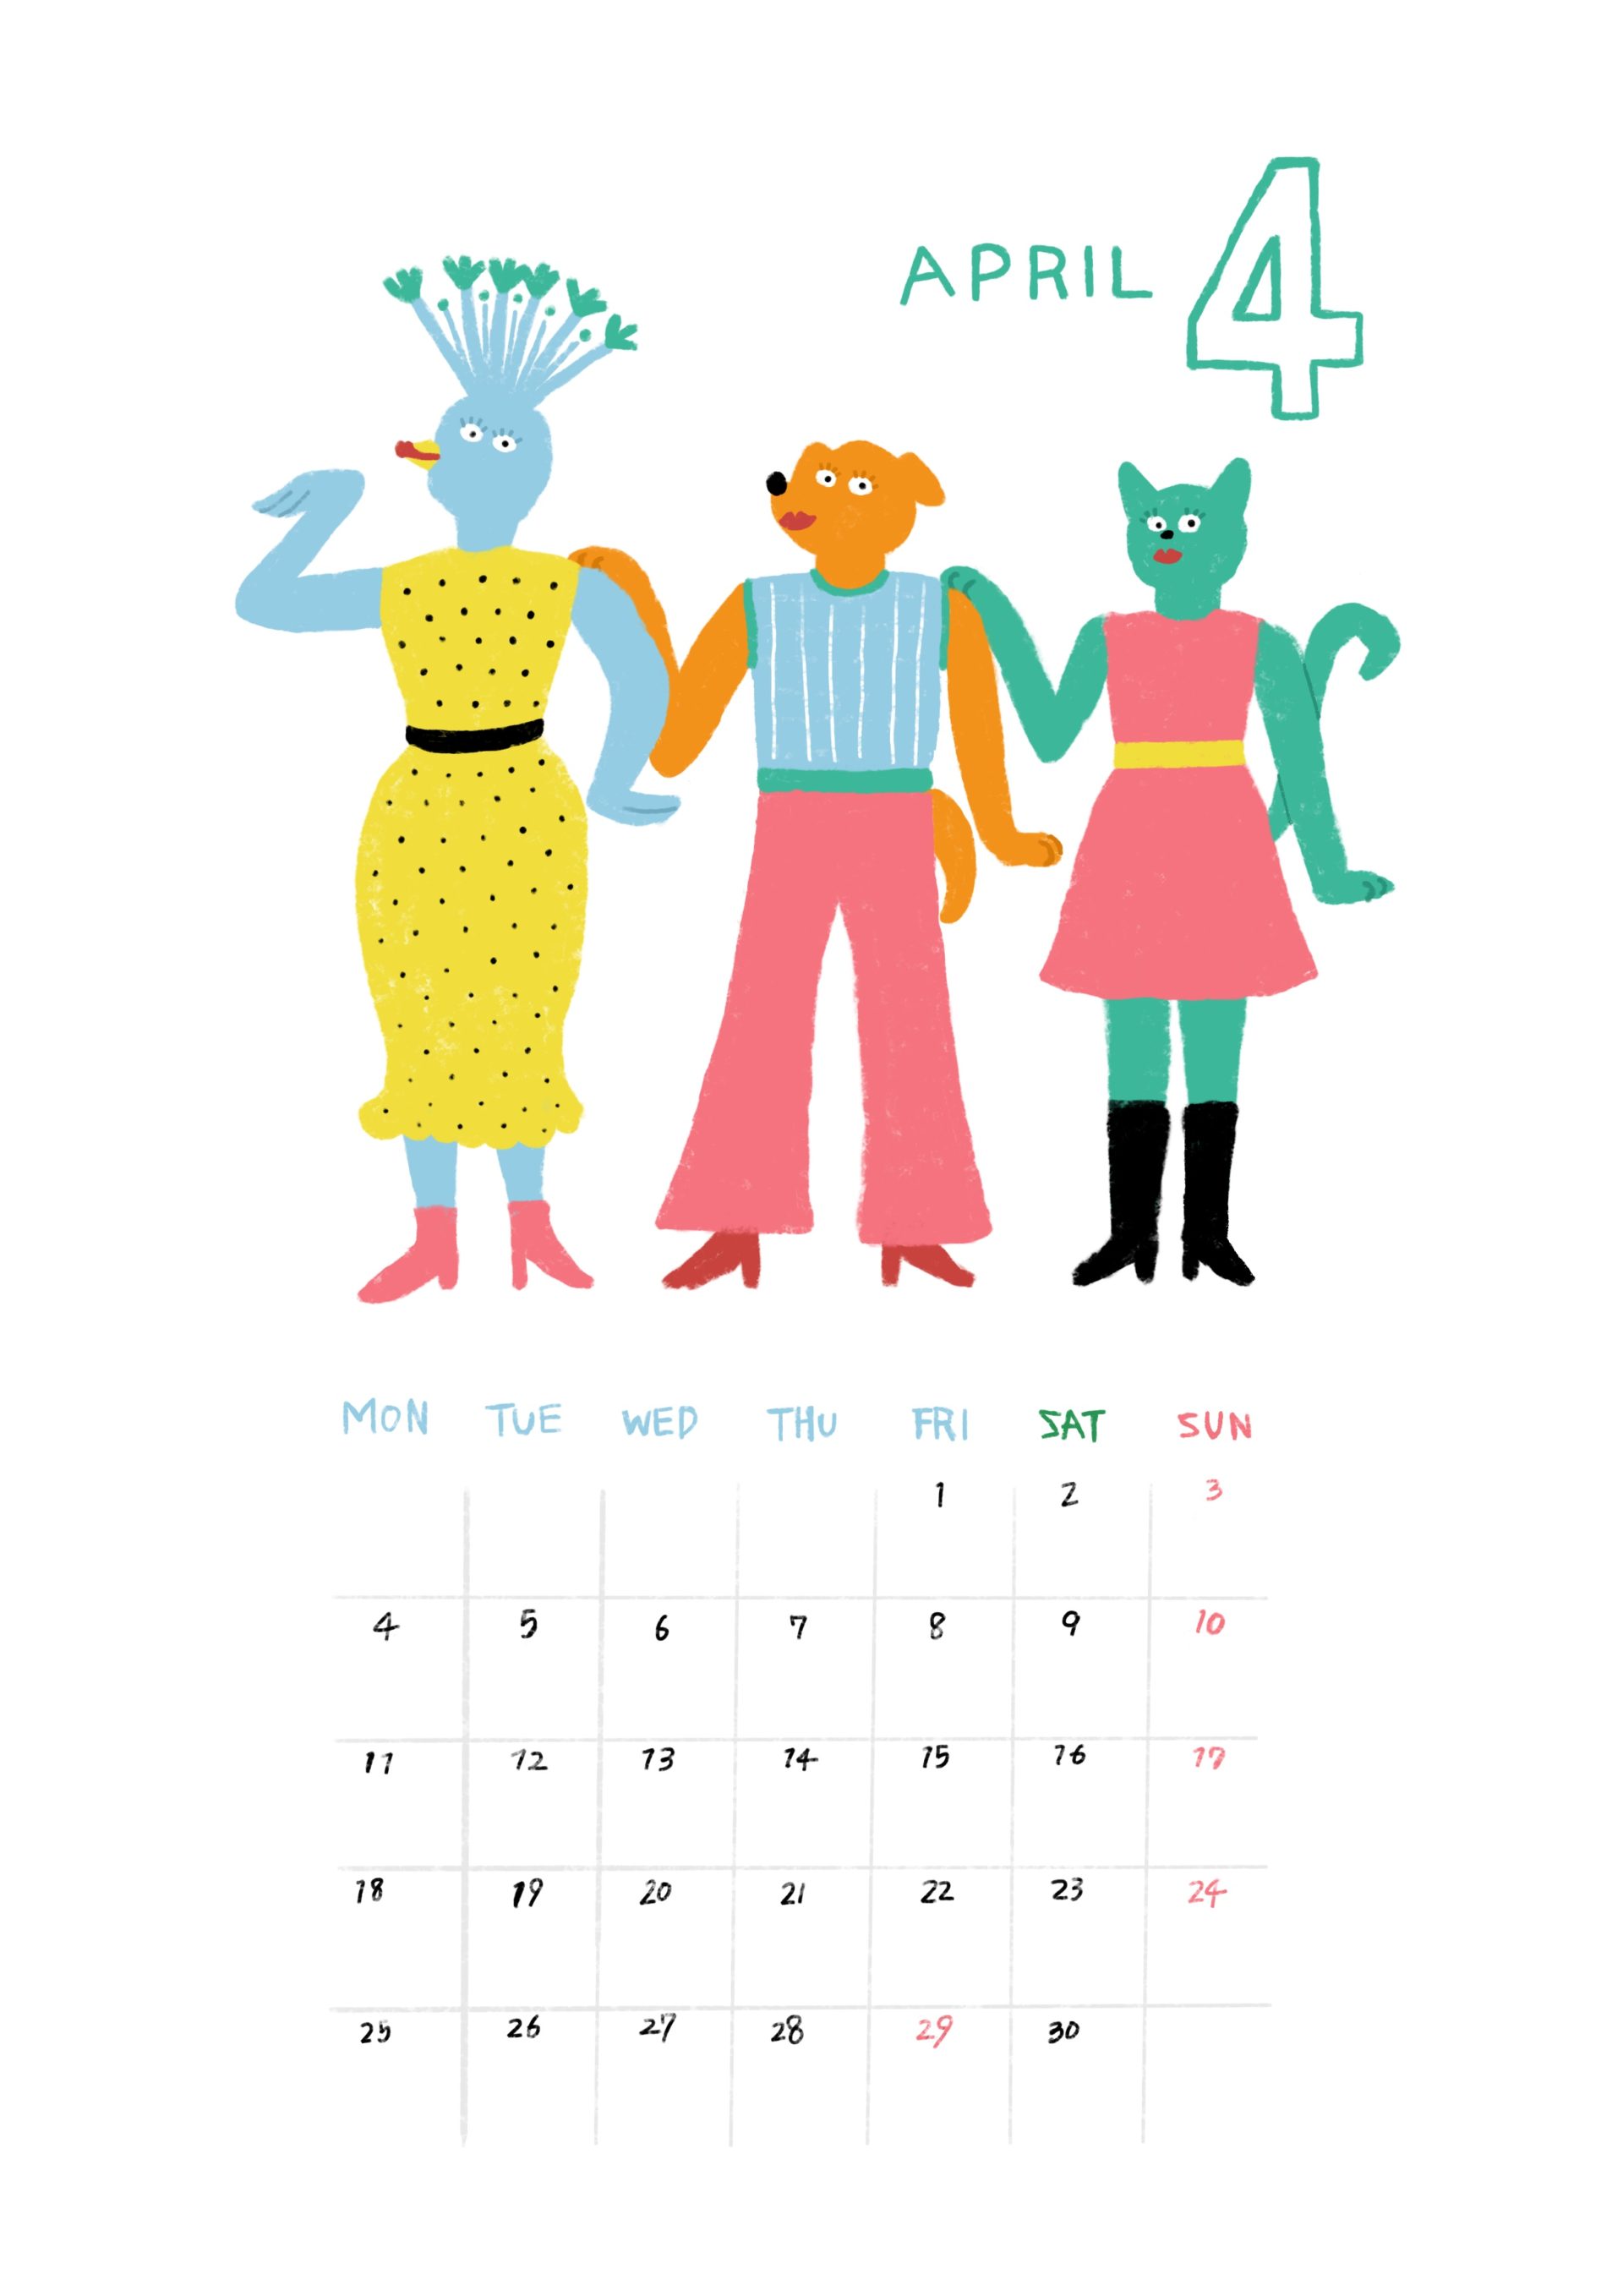 April 2022 calendar Illustration by onatsu